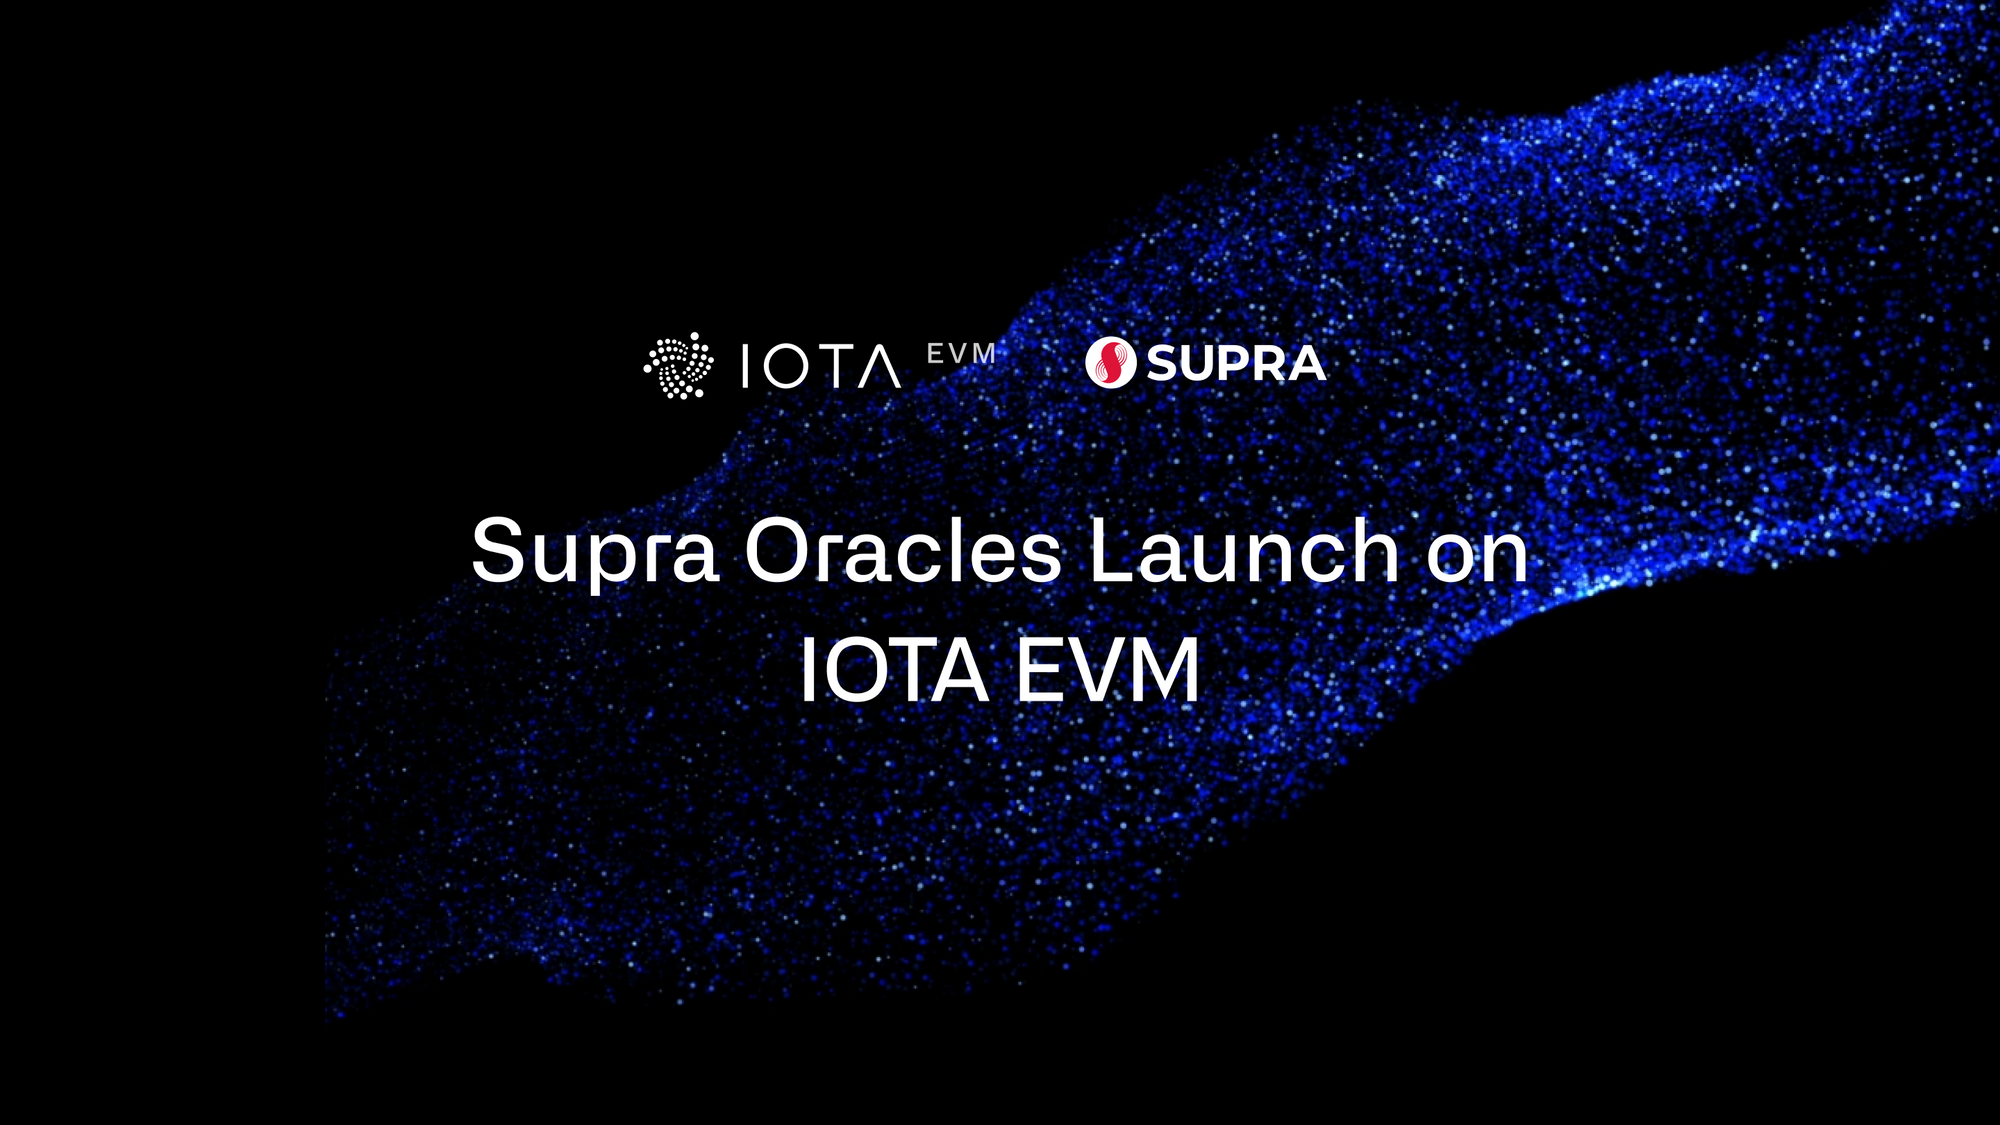 Supra Oracles Launch on IOTA EVM